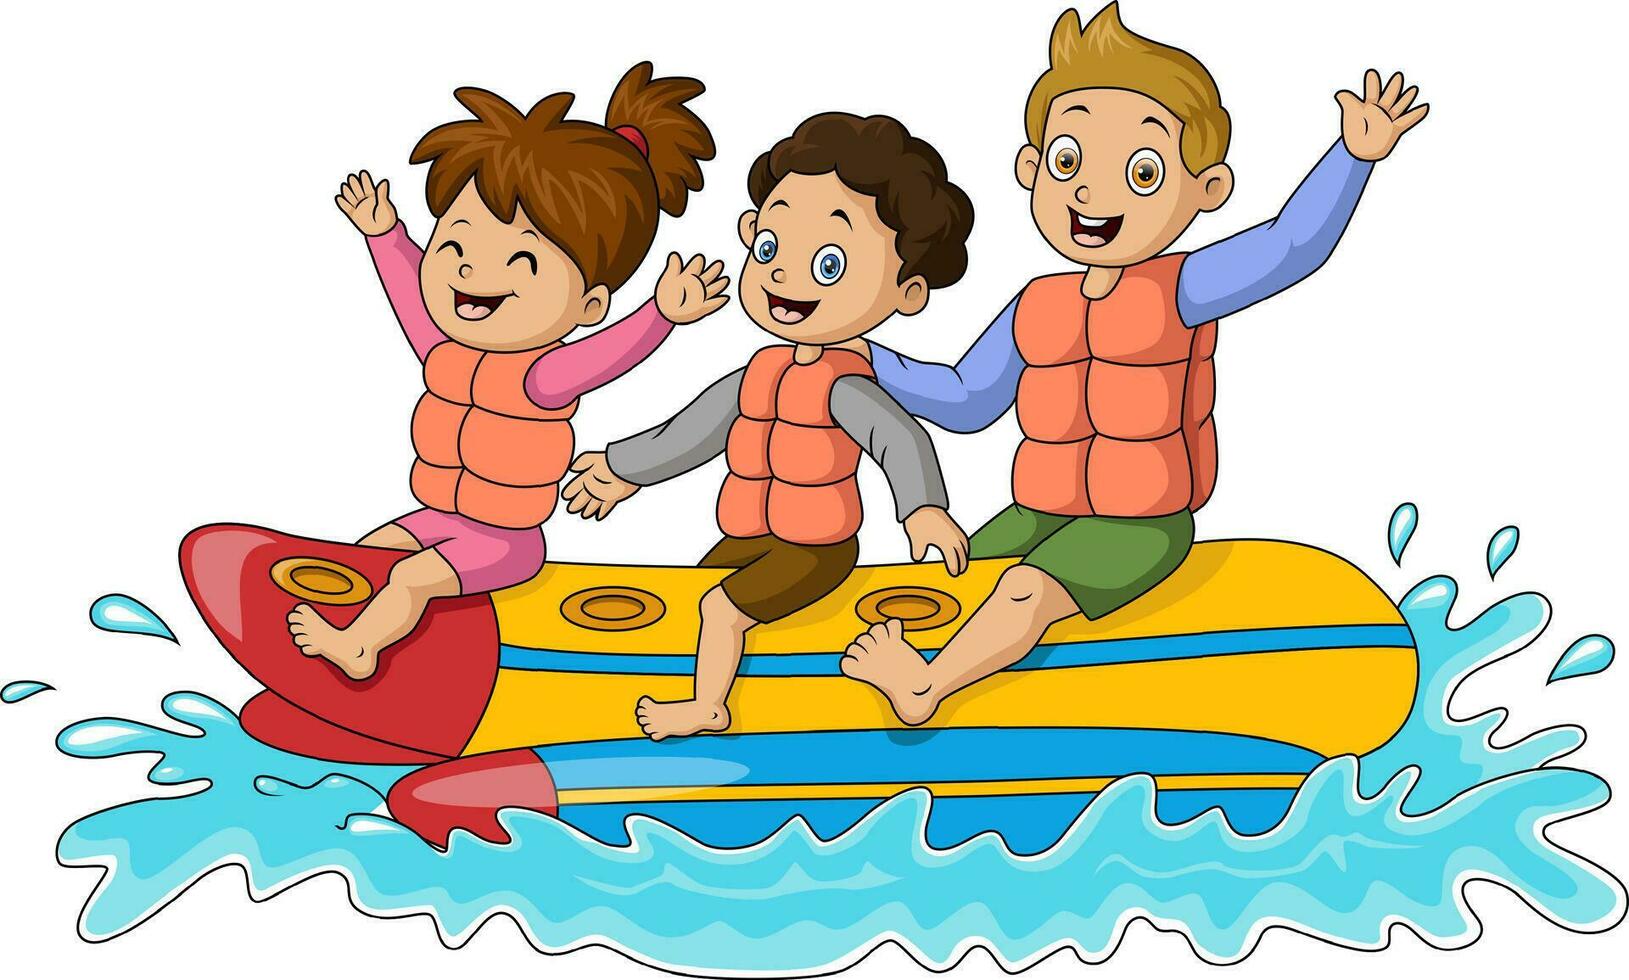 Cute children cartoon riding a banana boat vector